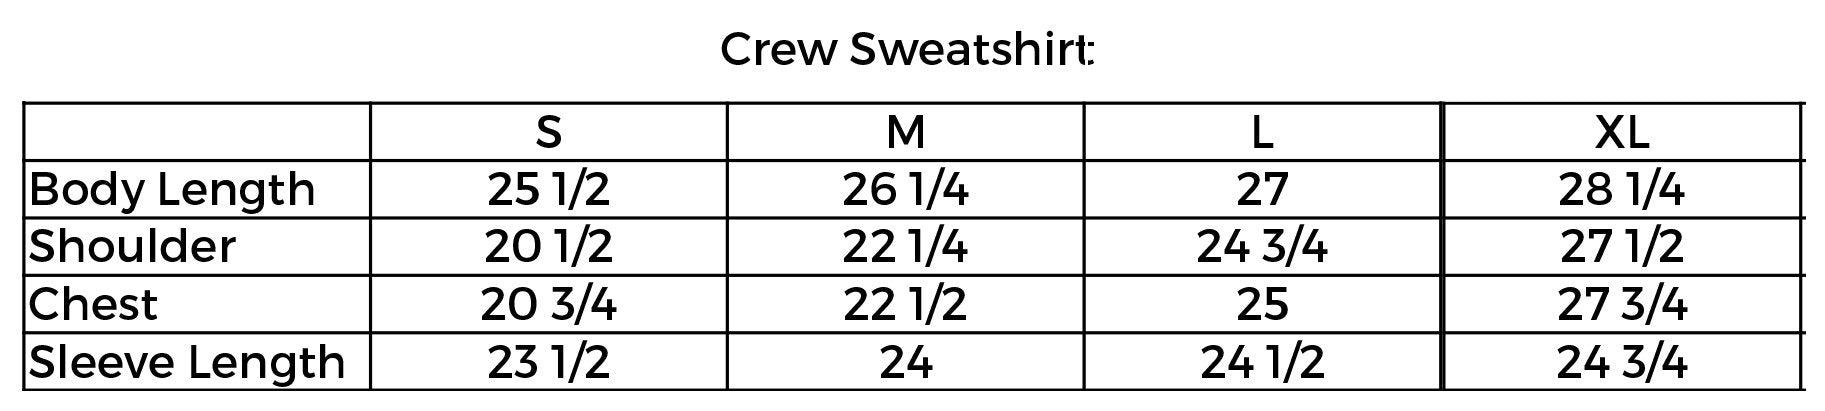 Navy Screenprint Sweatshirt